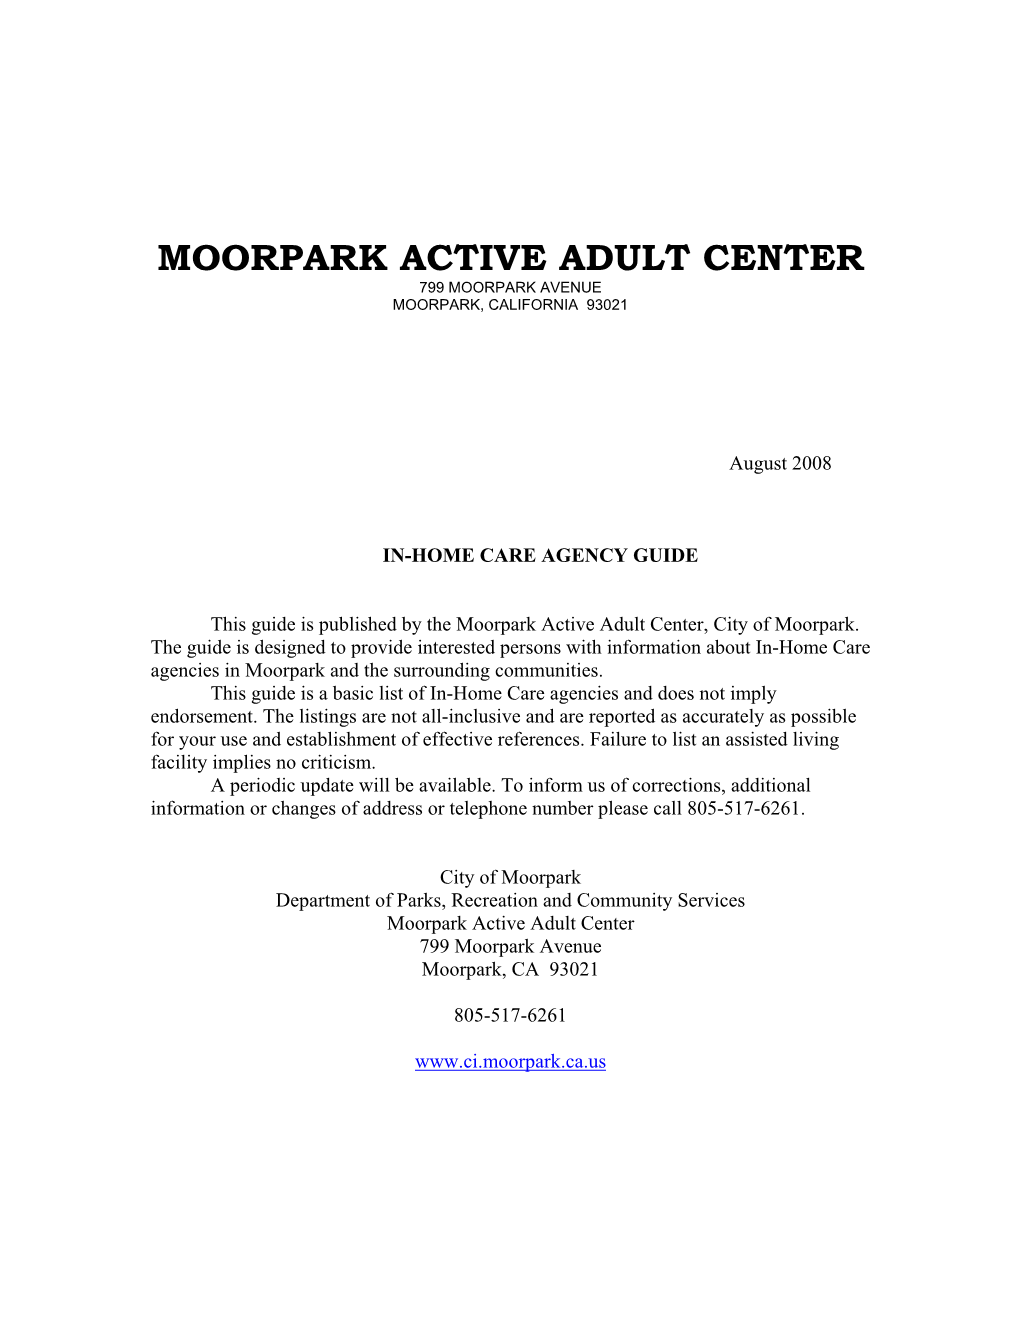 Moorpark Active Adult Center 799 Moorpark Avenue Moorpark, California 93021